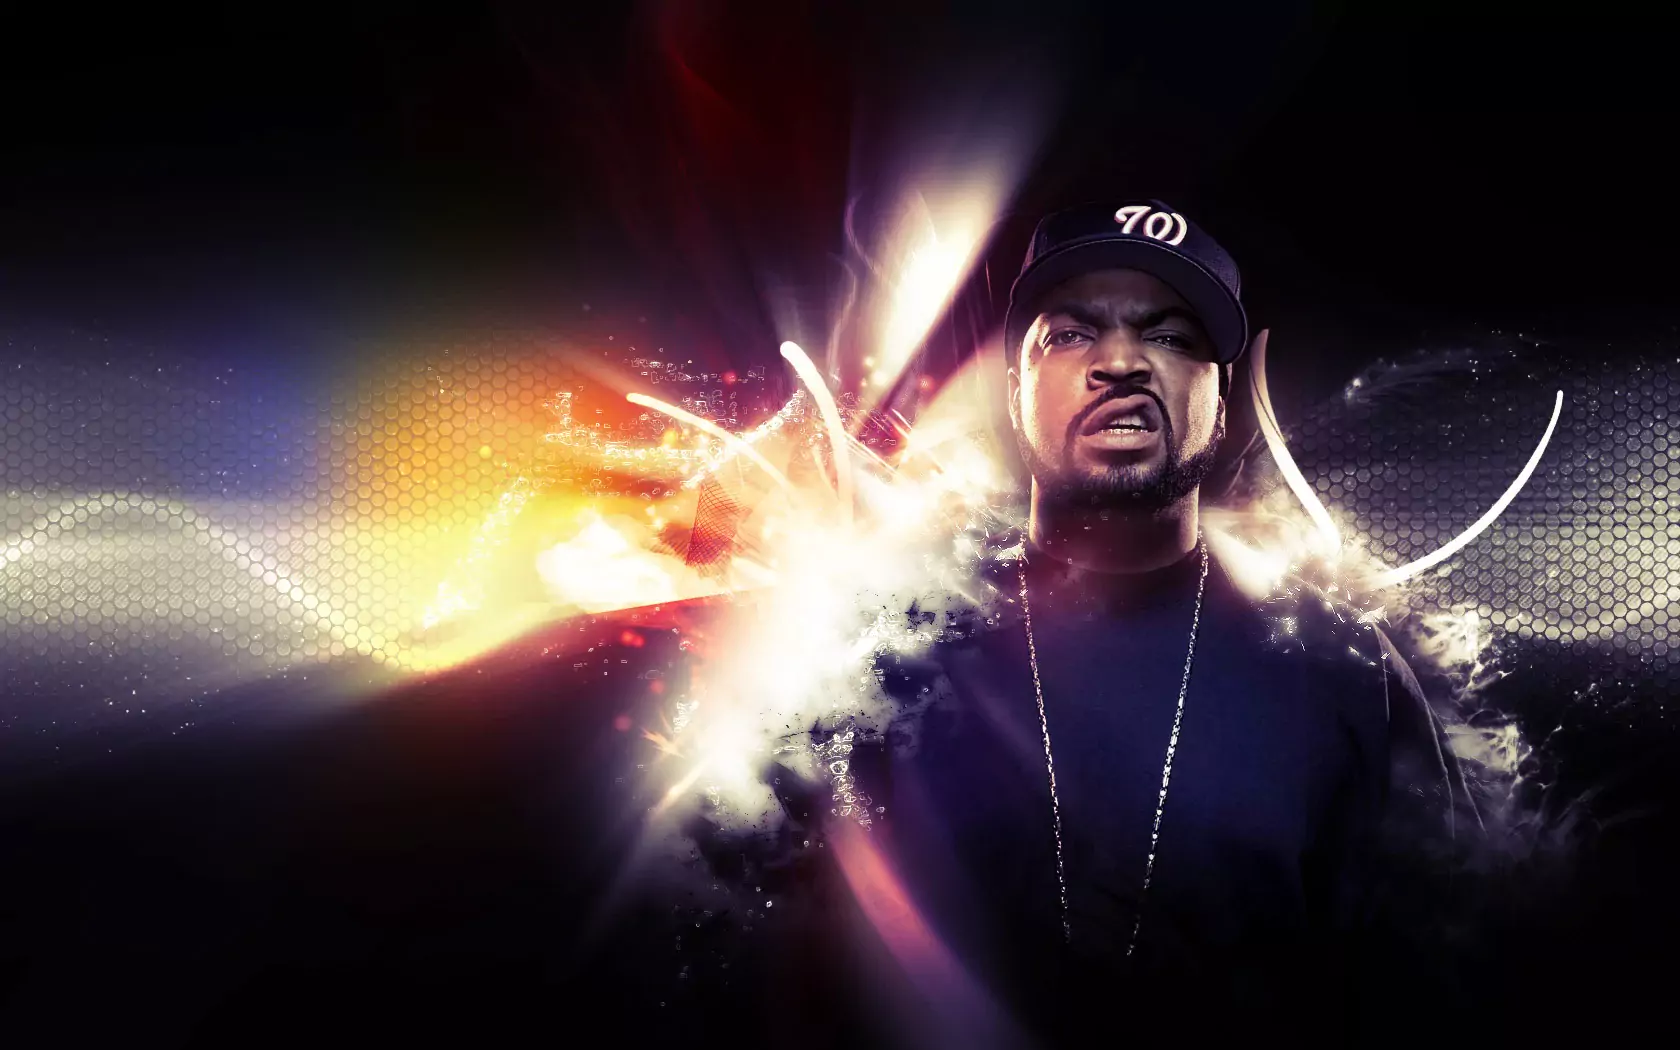 Ice Cube Background Explore more Actor, American Rapper, Filmmaker, Ice Cube,  lyrics wallpaper.